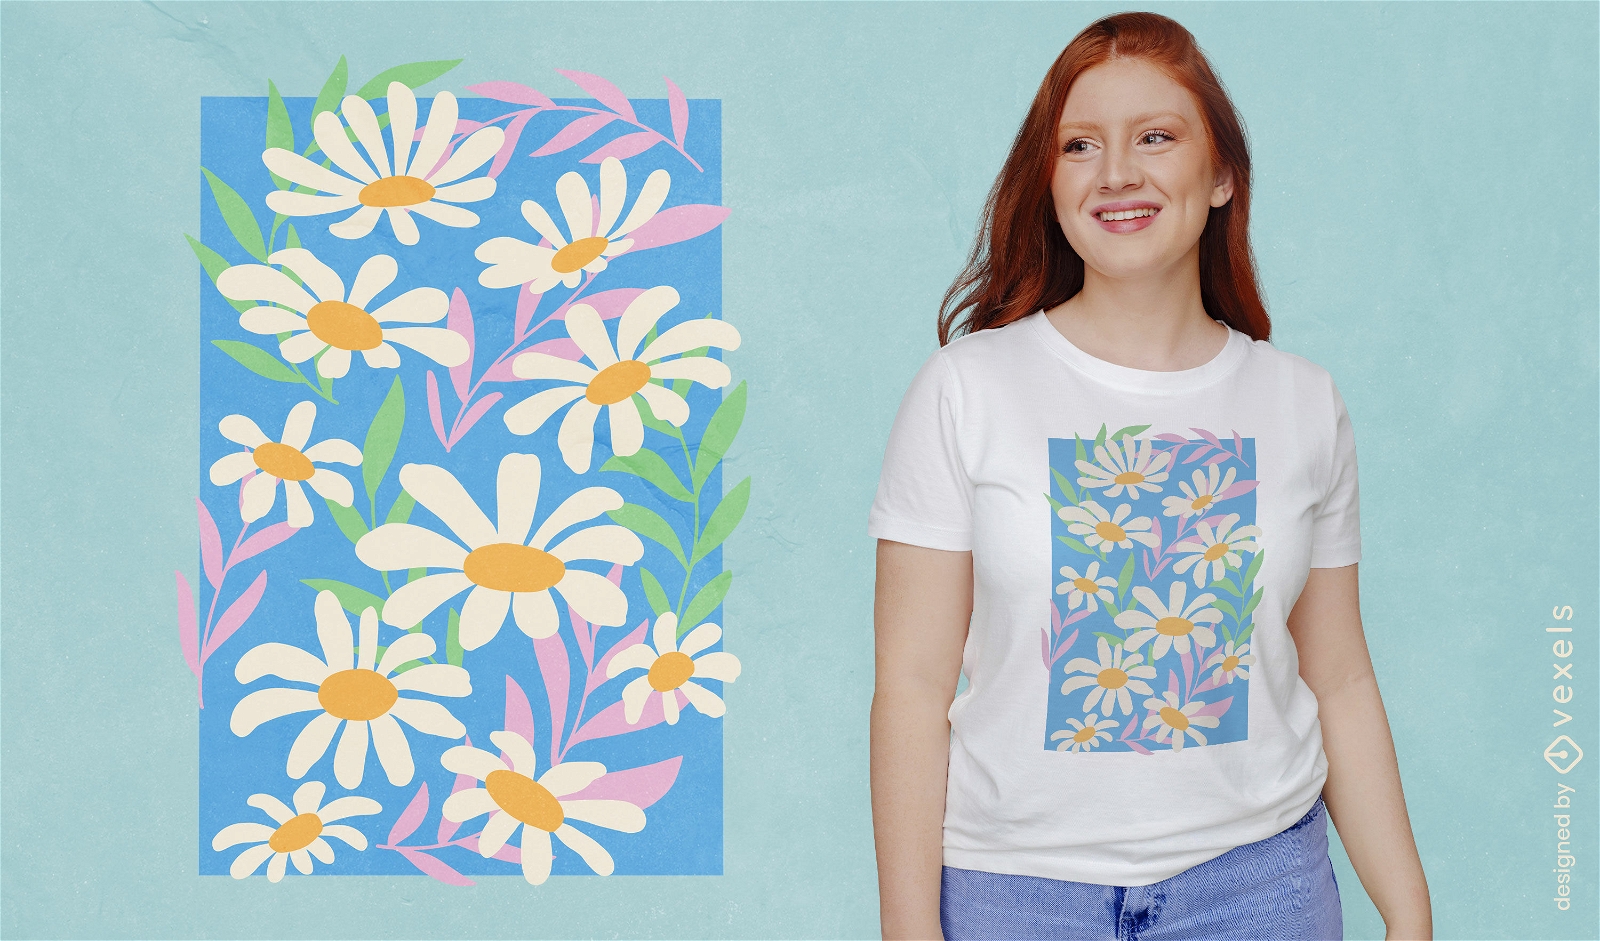 Diseño de camiseta de composición de flores de margarita.